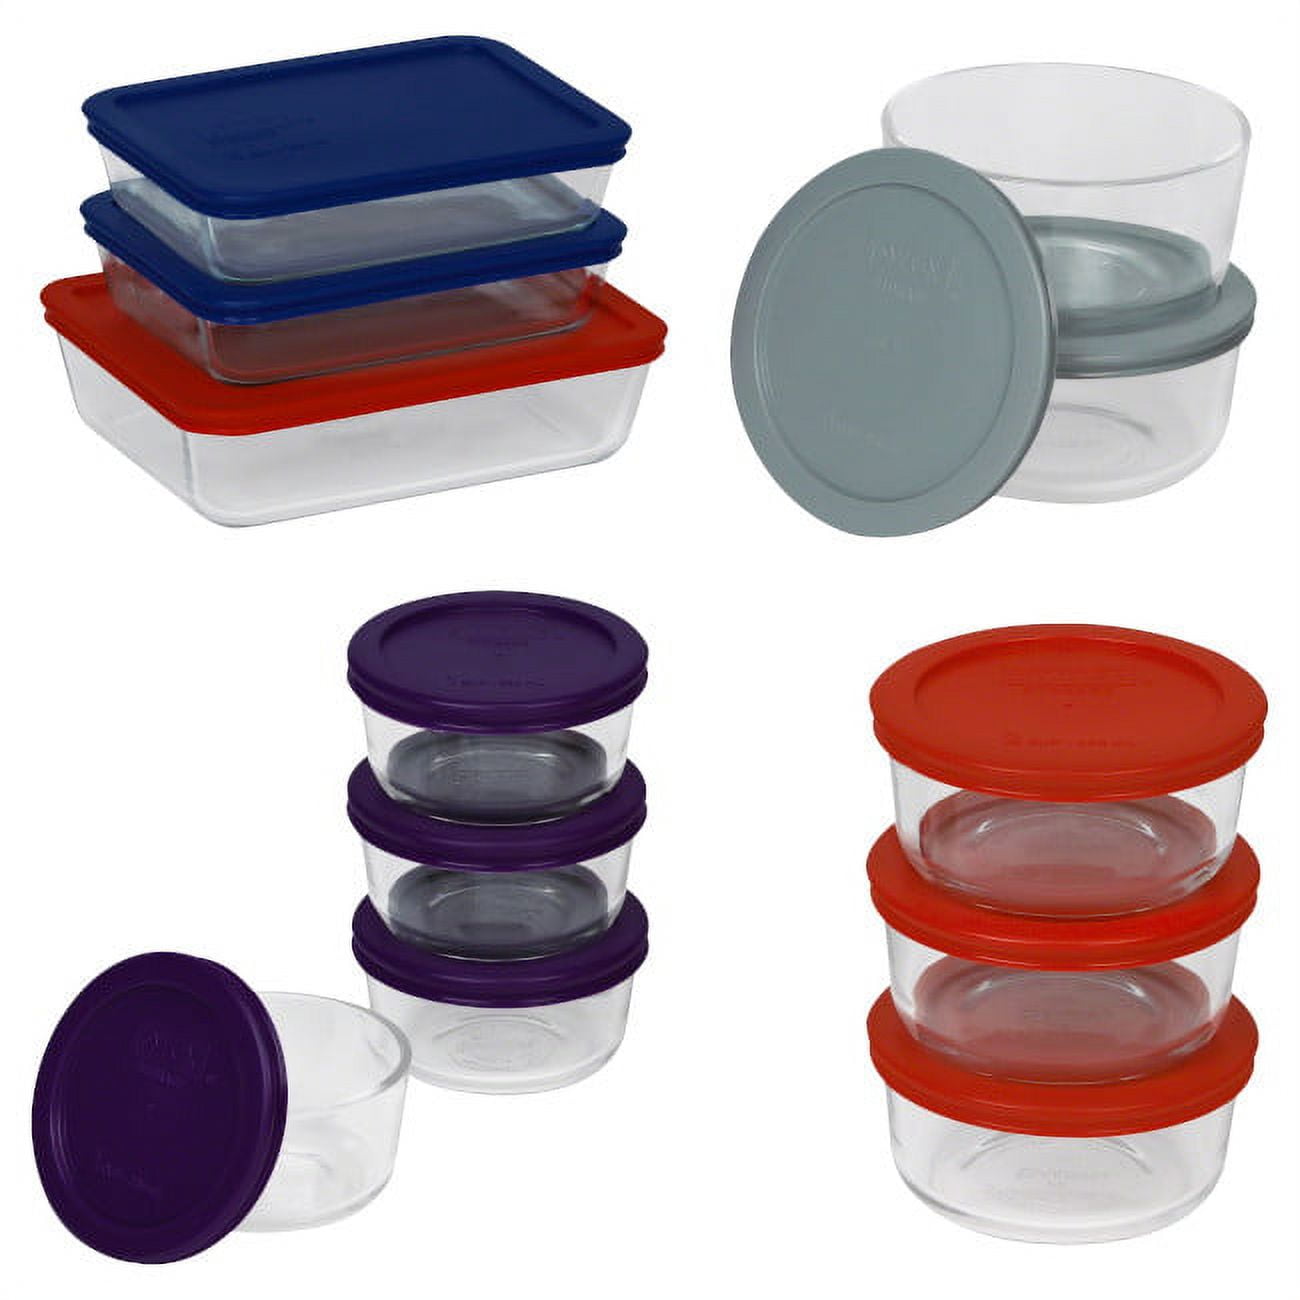 Pyrex Simply Store Glass Bakeware Set, 24 Piece